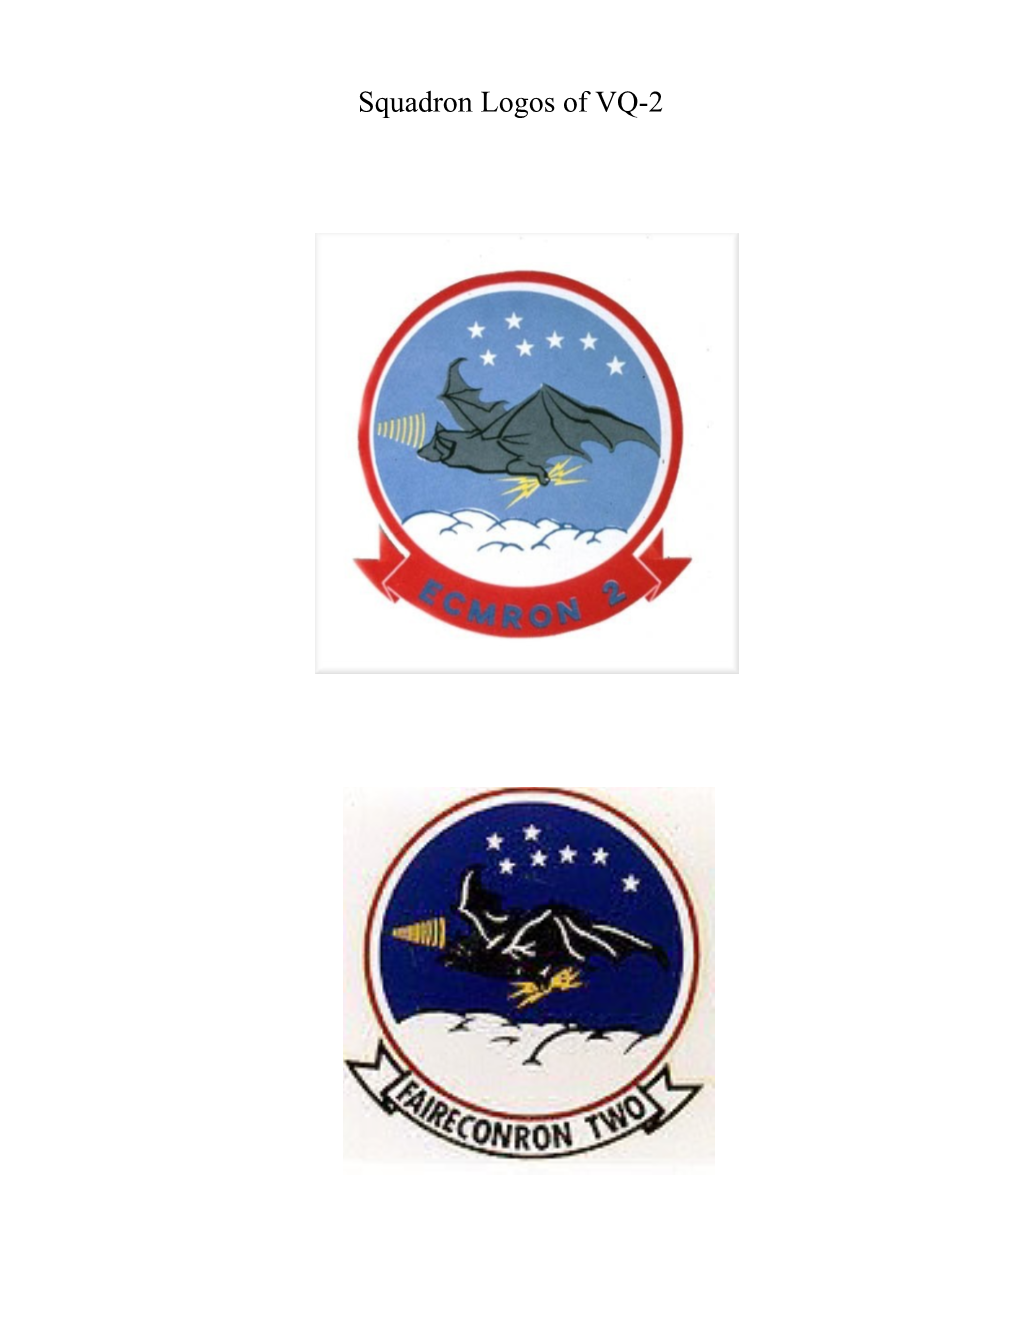 Squadron Logos of VQ-2